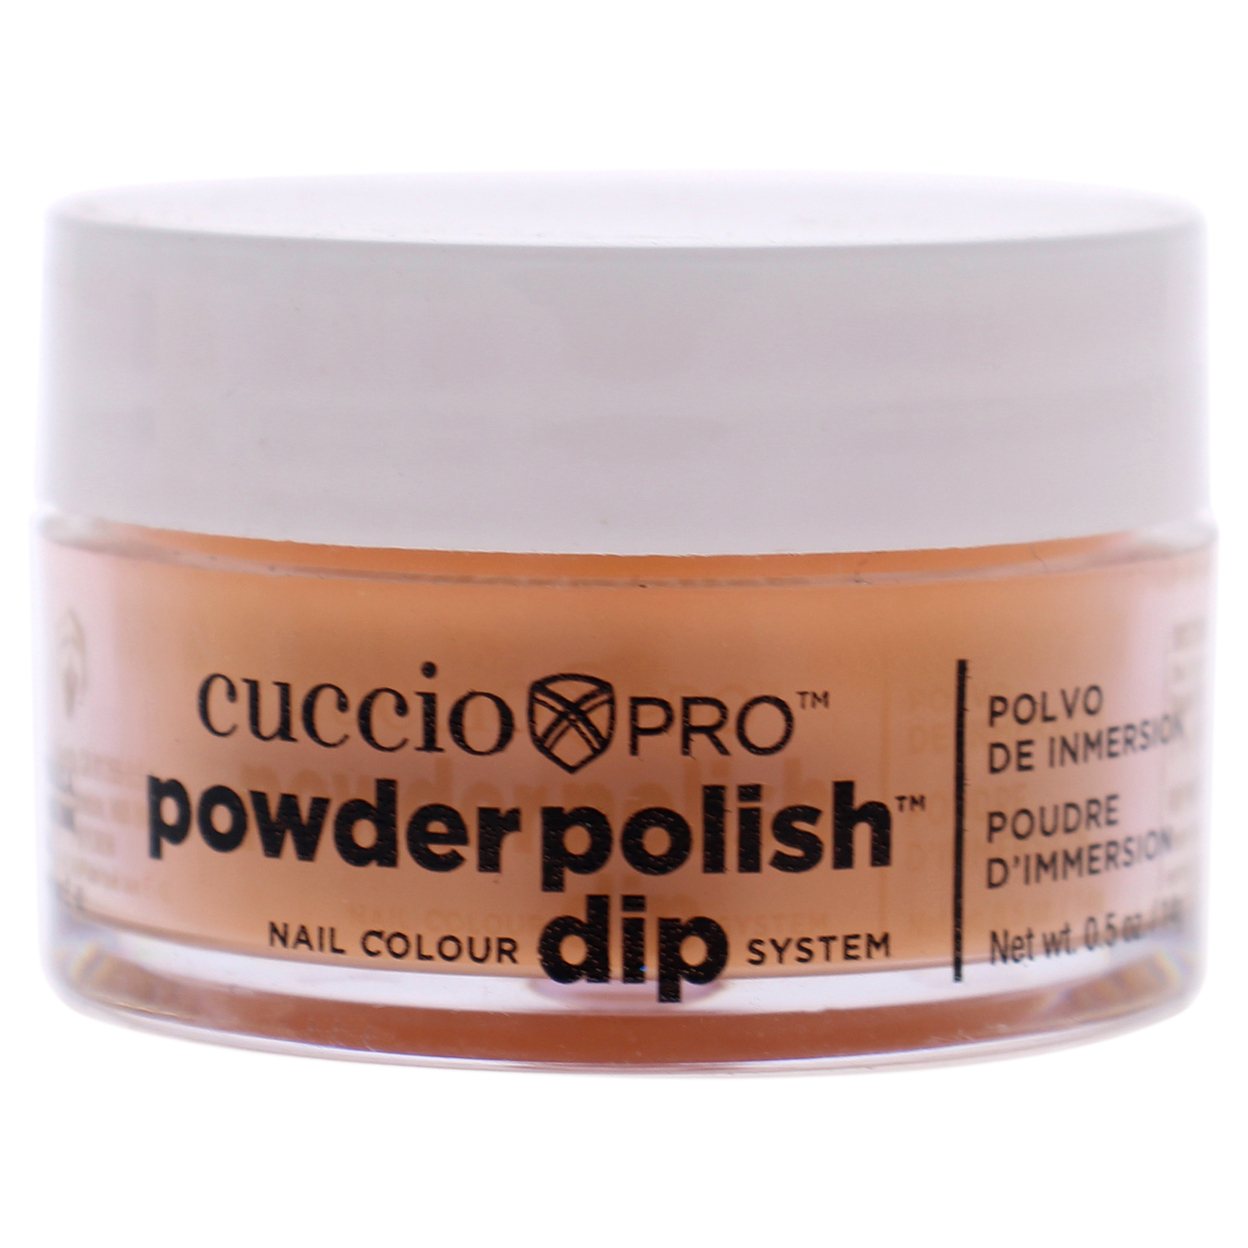 Cuccio Colour Pro Powder Polish Nail Colour Dip System - Carrot Orange Nail Powder 0.5 Oz